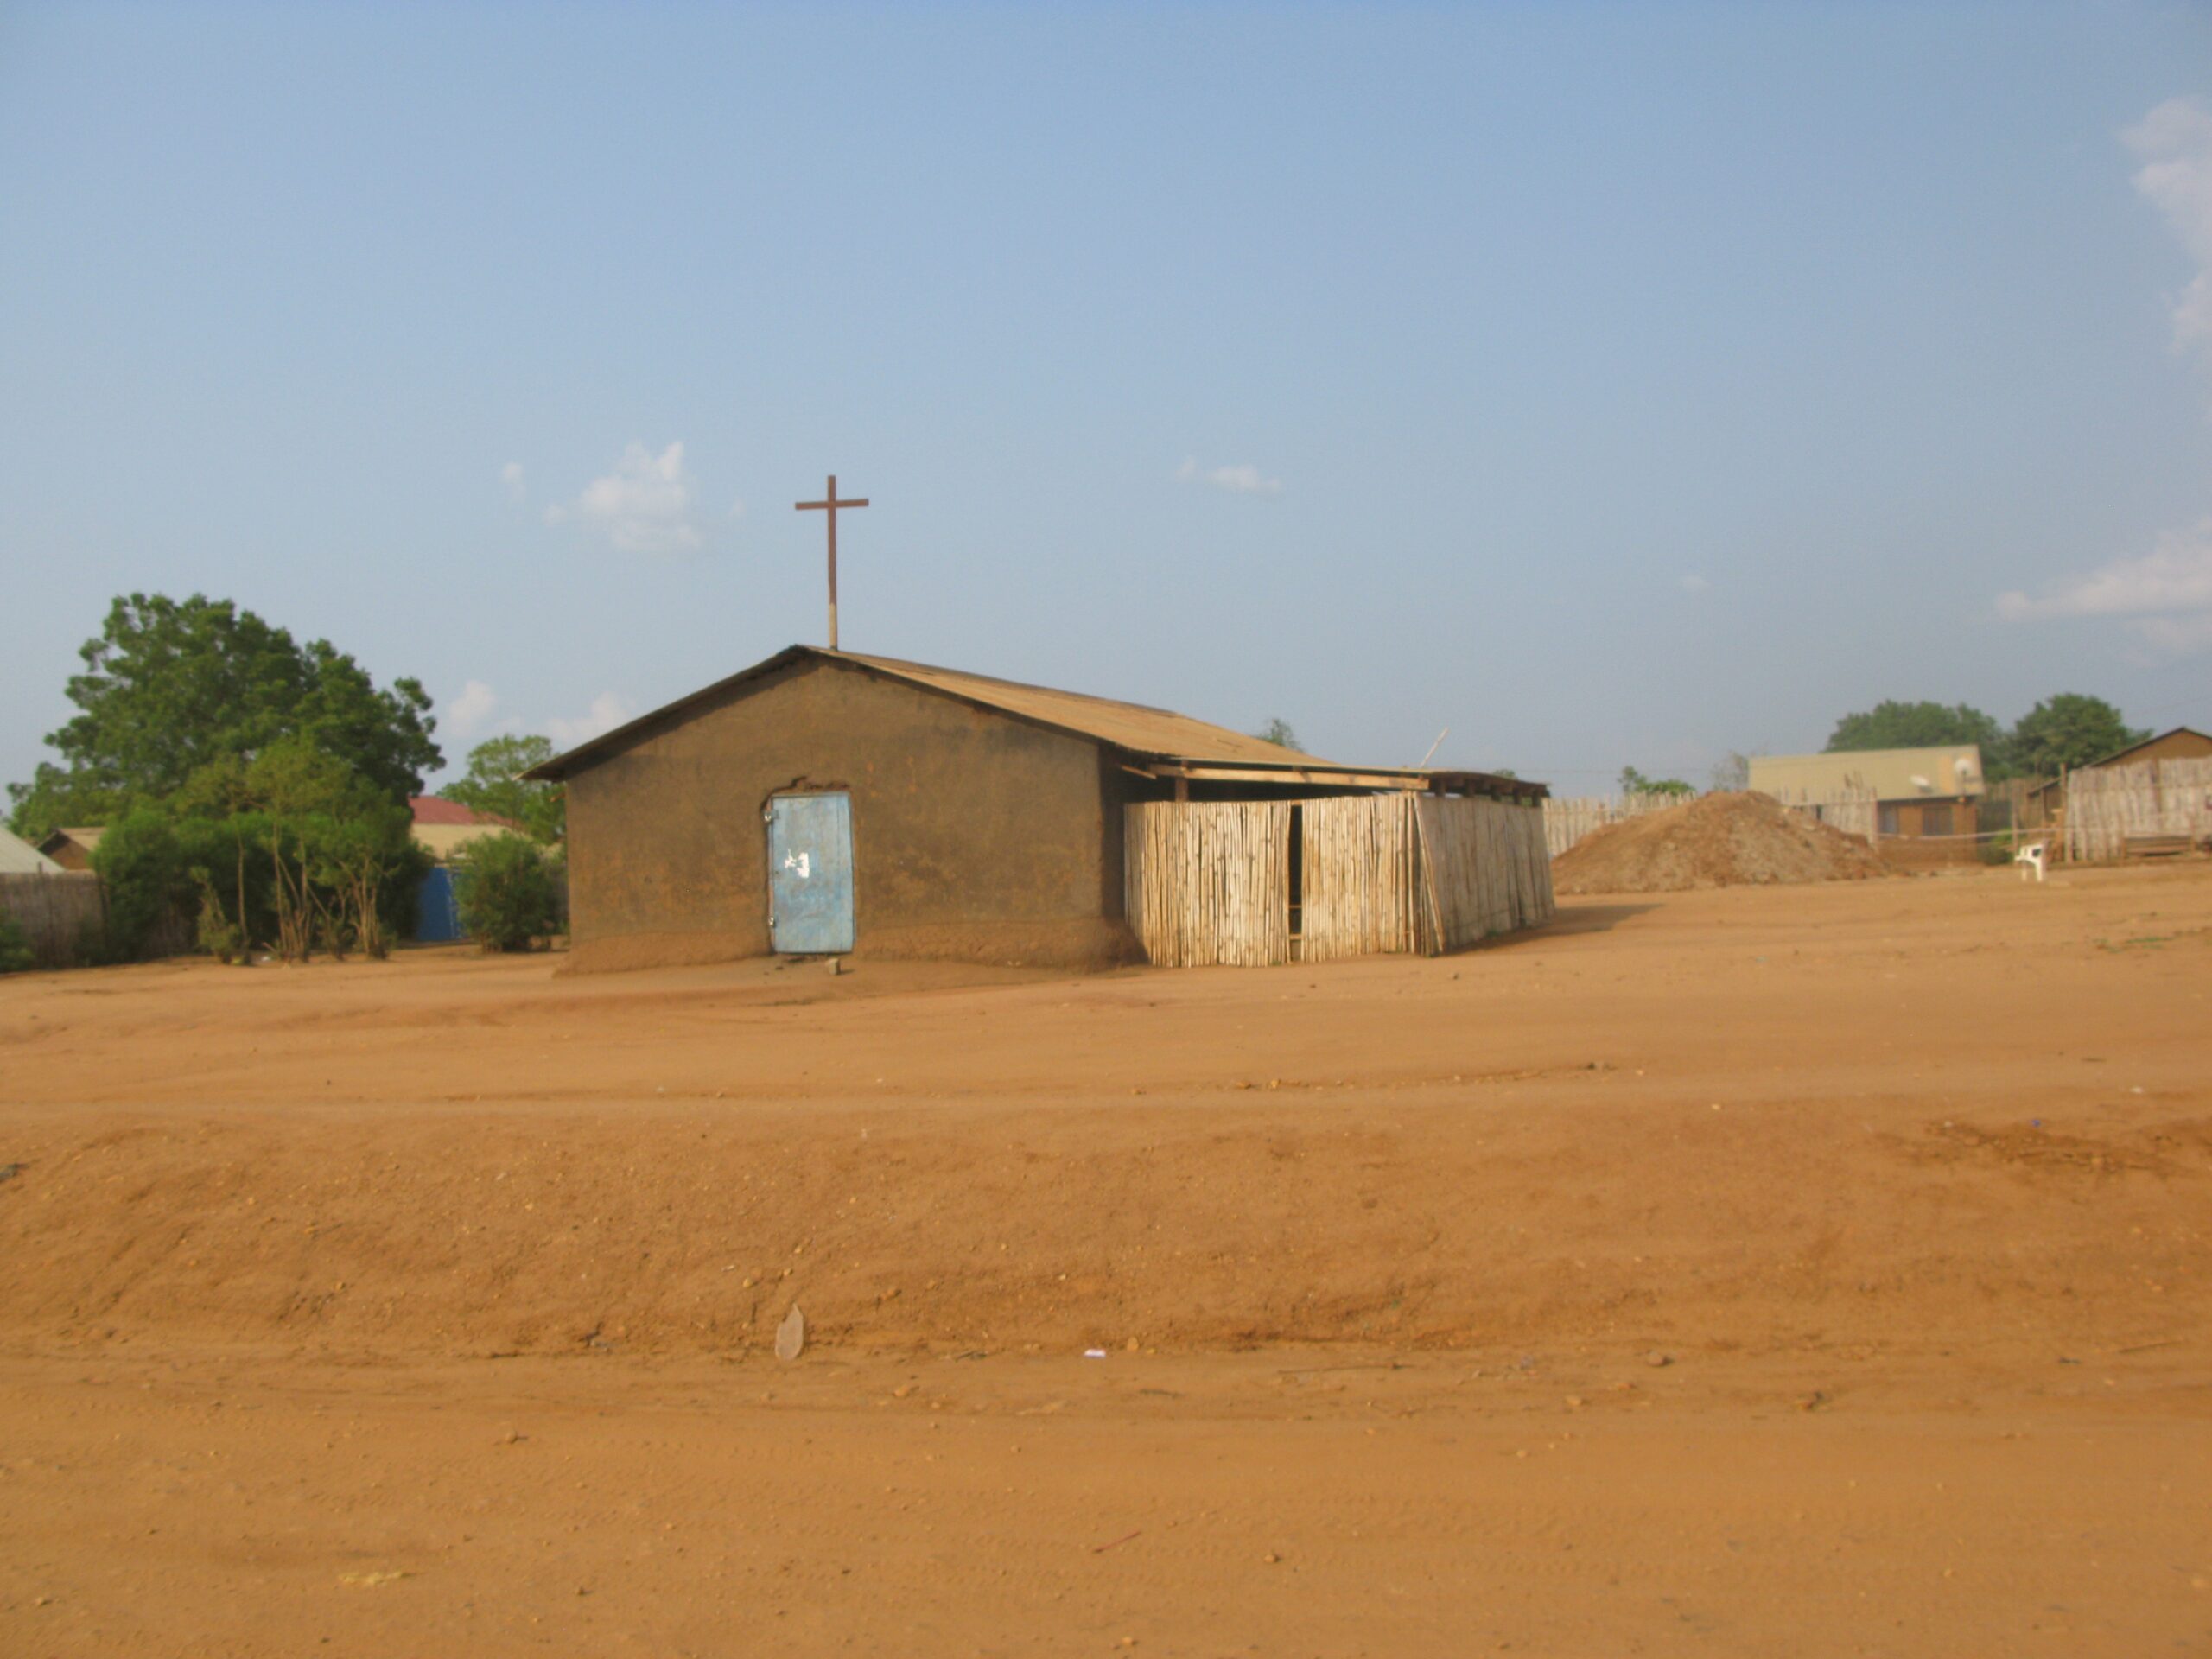 A church squats on an orange desert landscape.